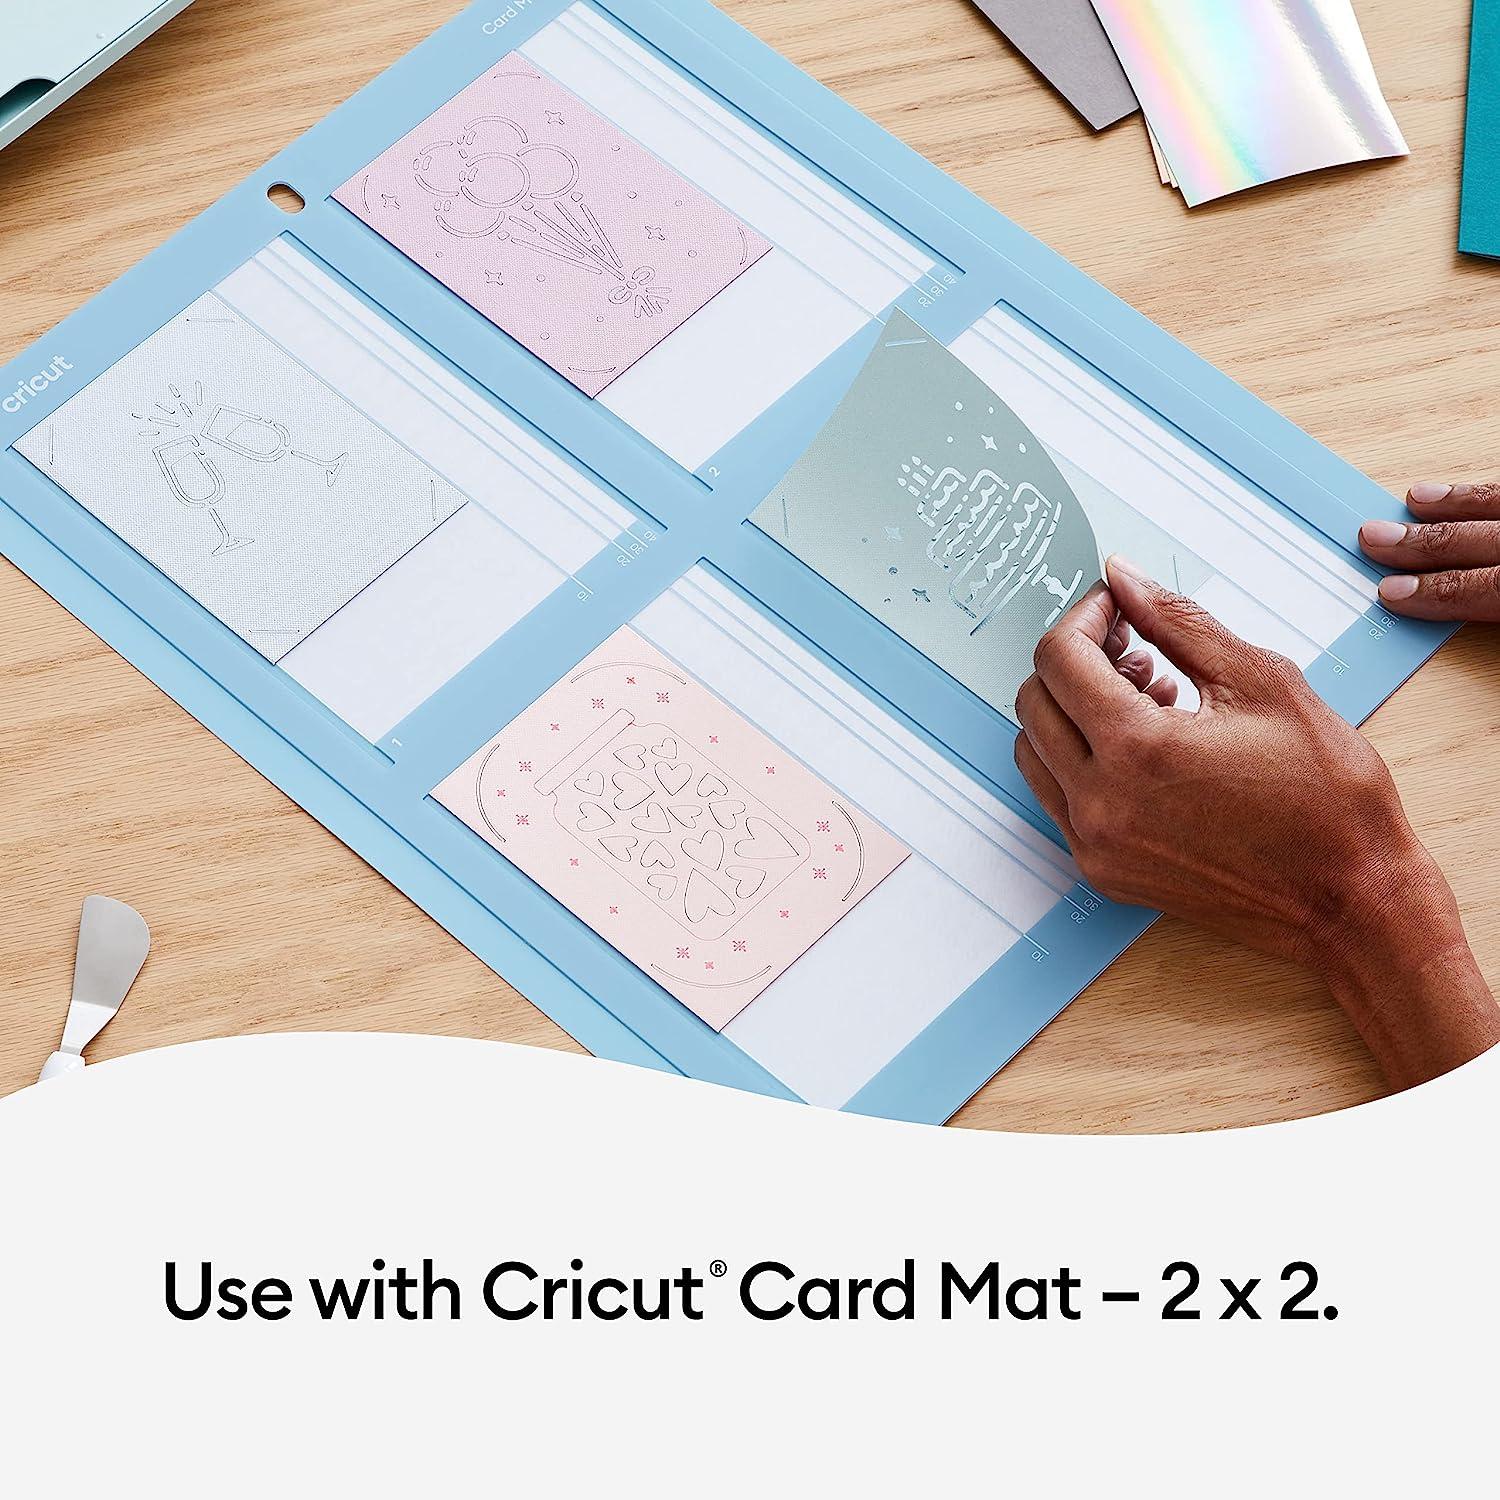 Cricut Insert Cards R40, Create Depth-Filled Birthday Cards, Thank